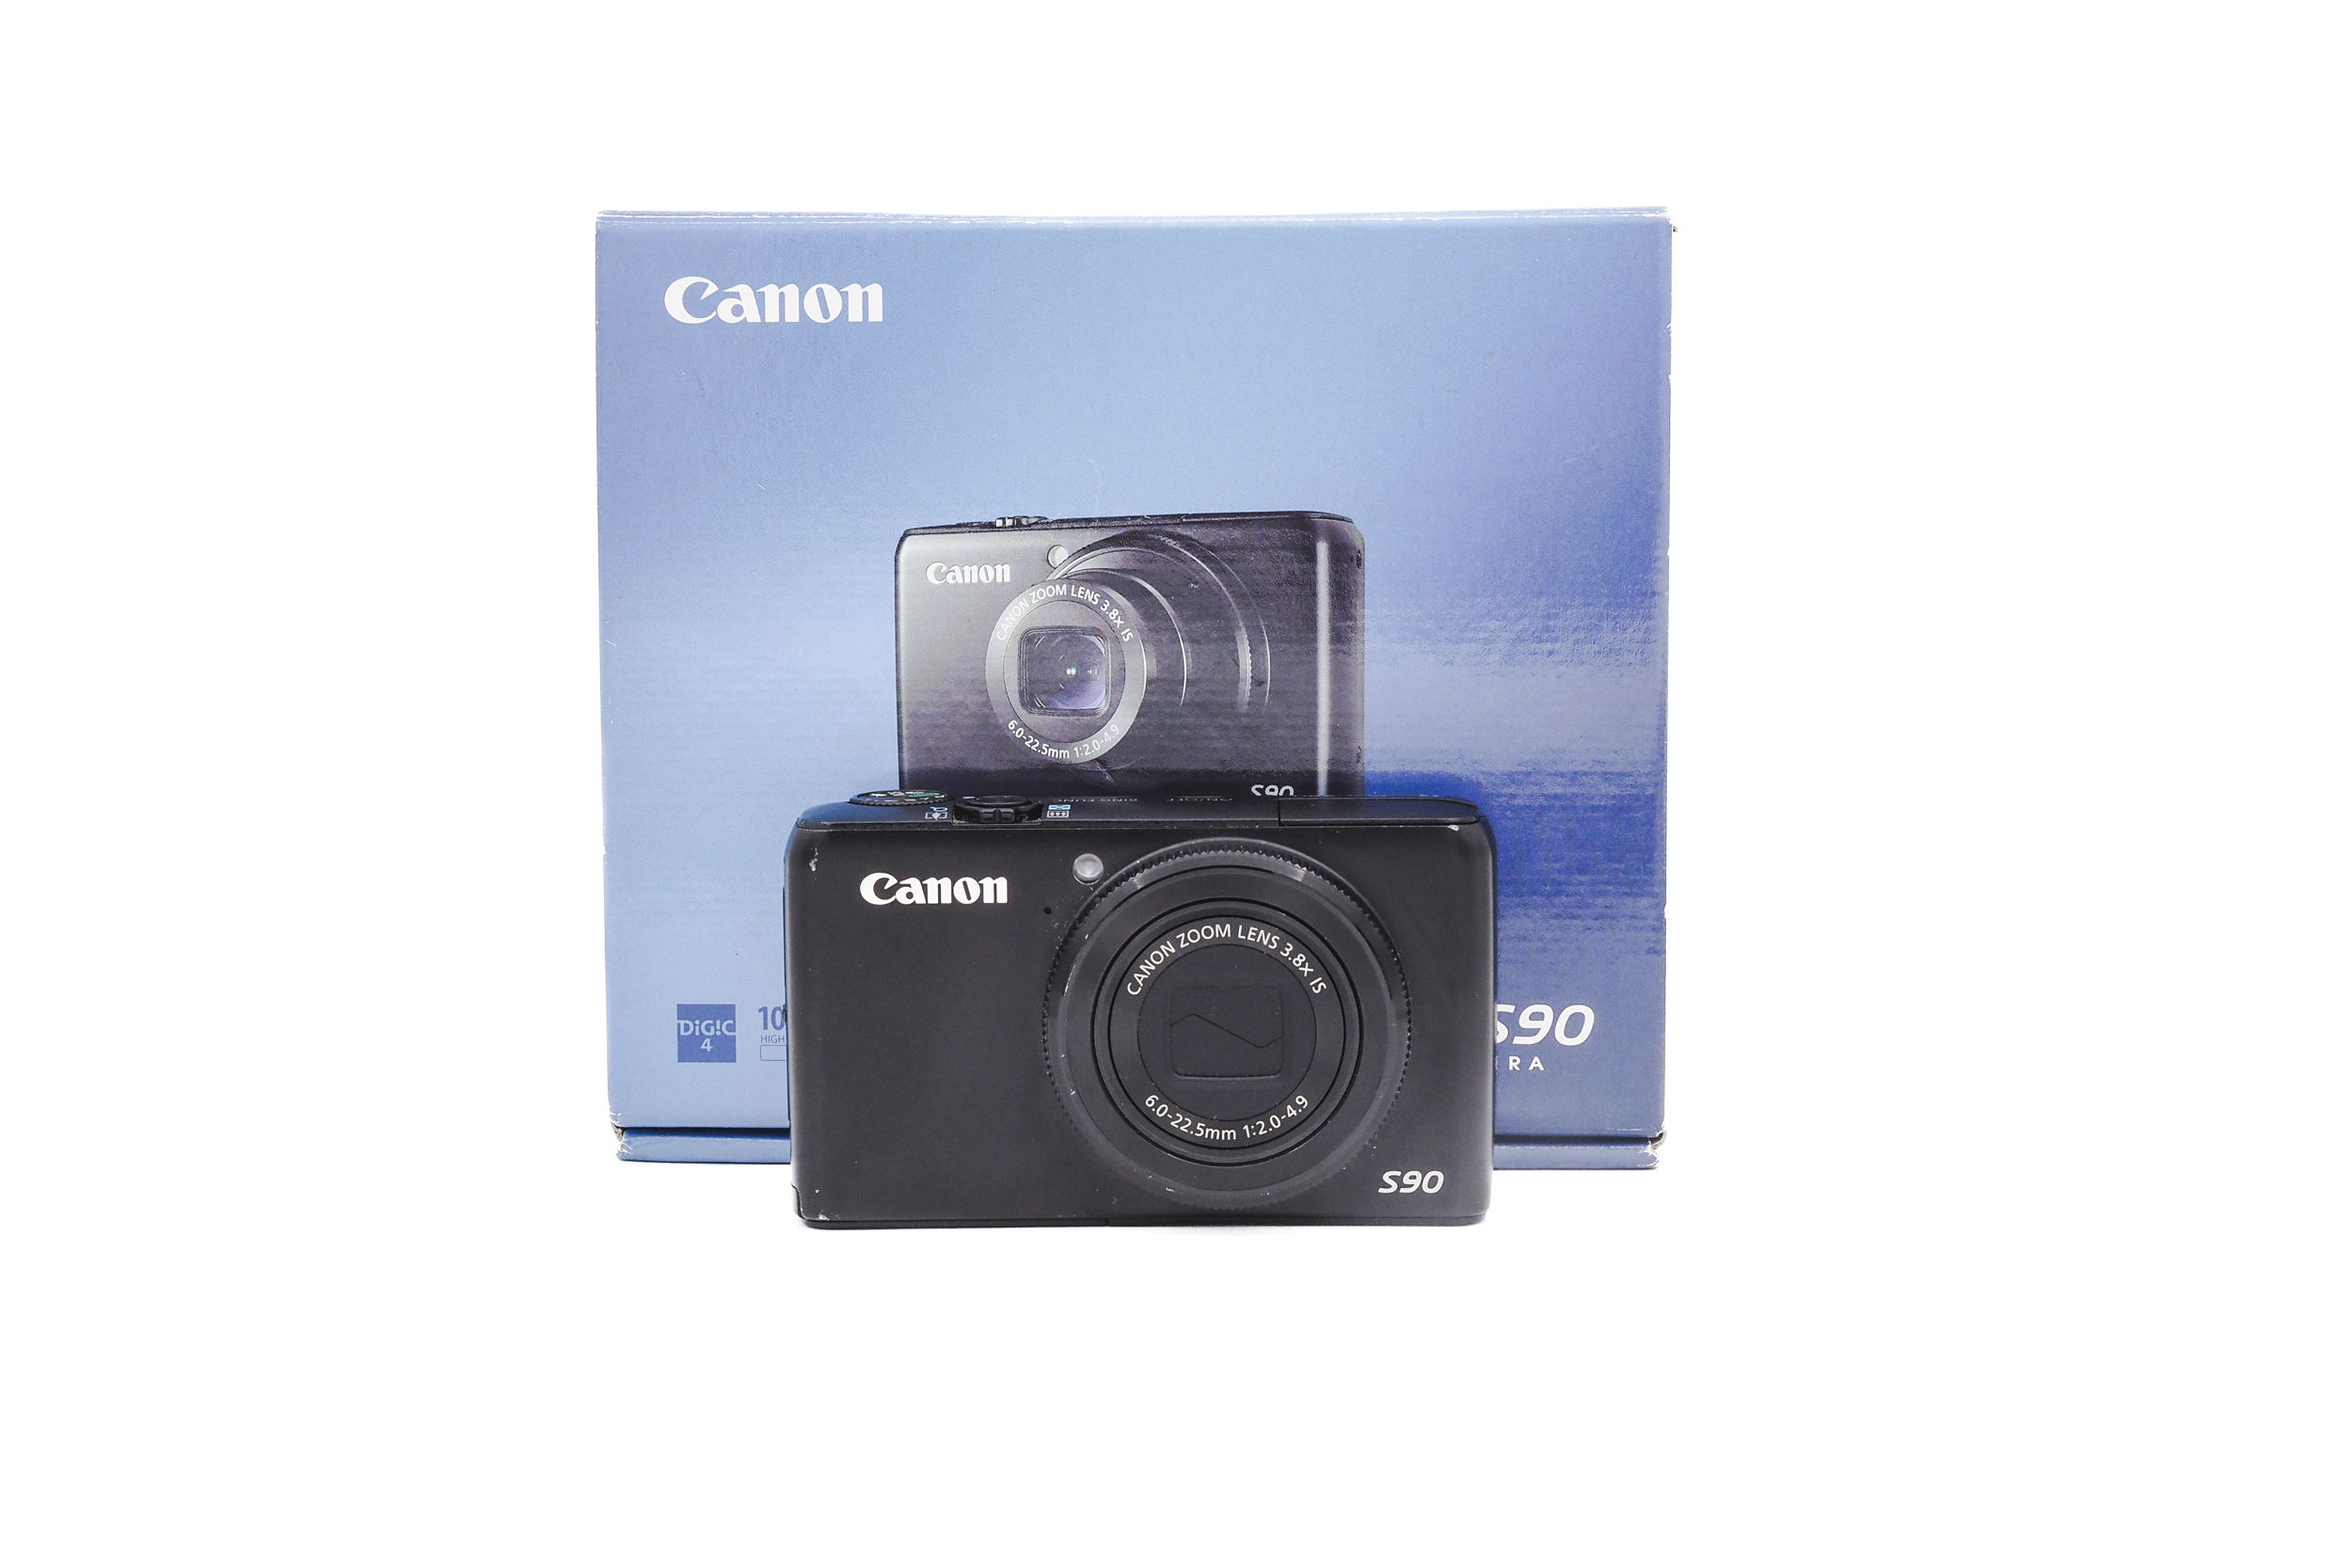 Canon Powershot S90 2010